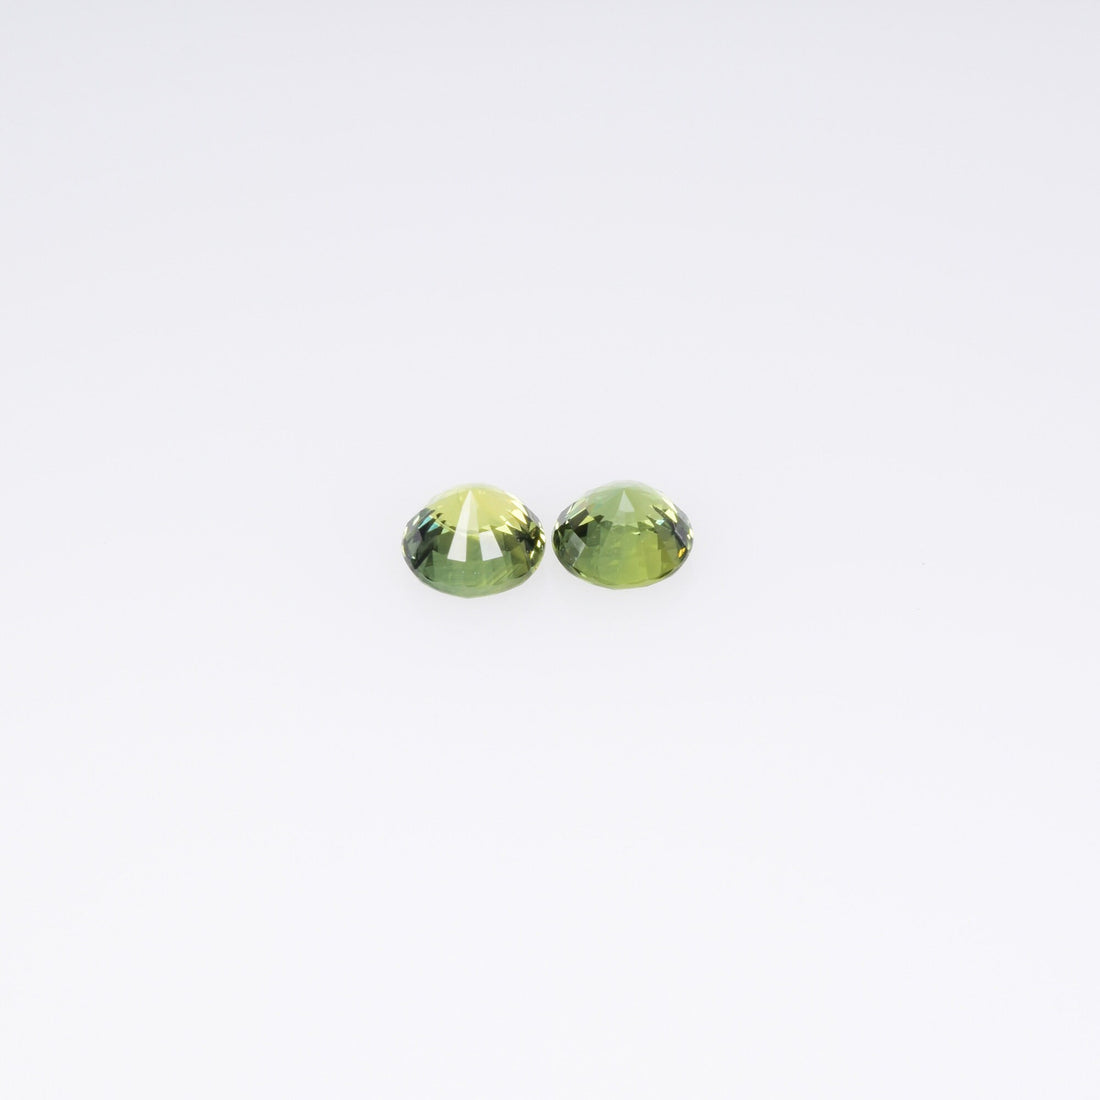 4.0 mm Natural Teal Greenish yellow Parti Sapphire Loose Pair Gemstone Round Cut